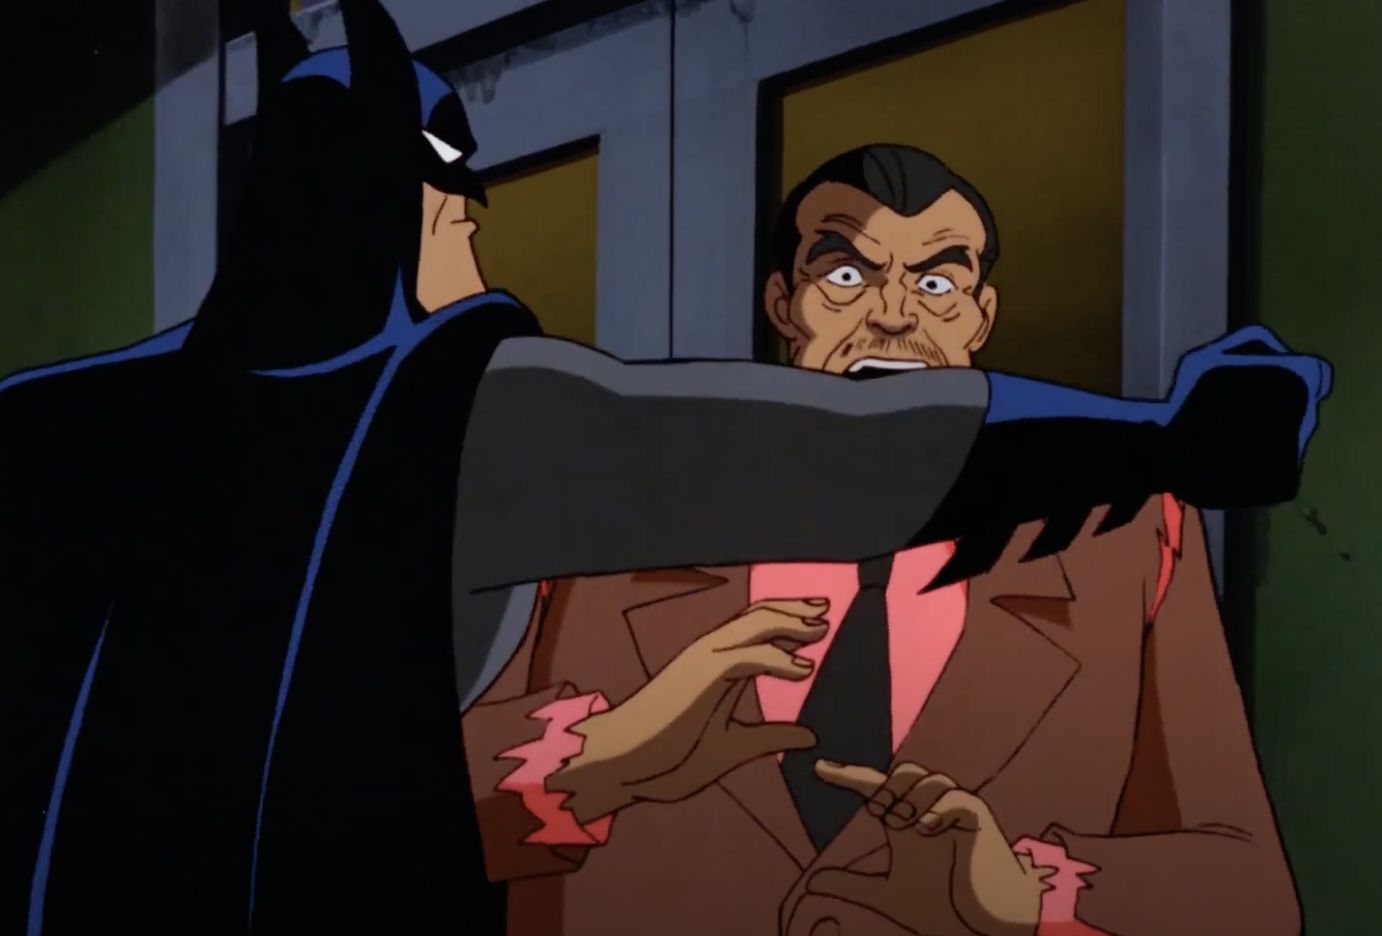 The Batman Cartoon Series and The Pop Culture Impact